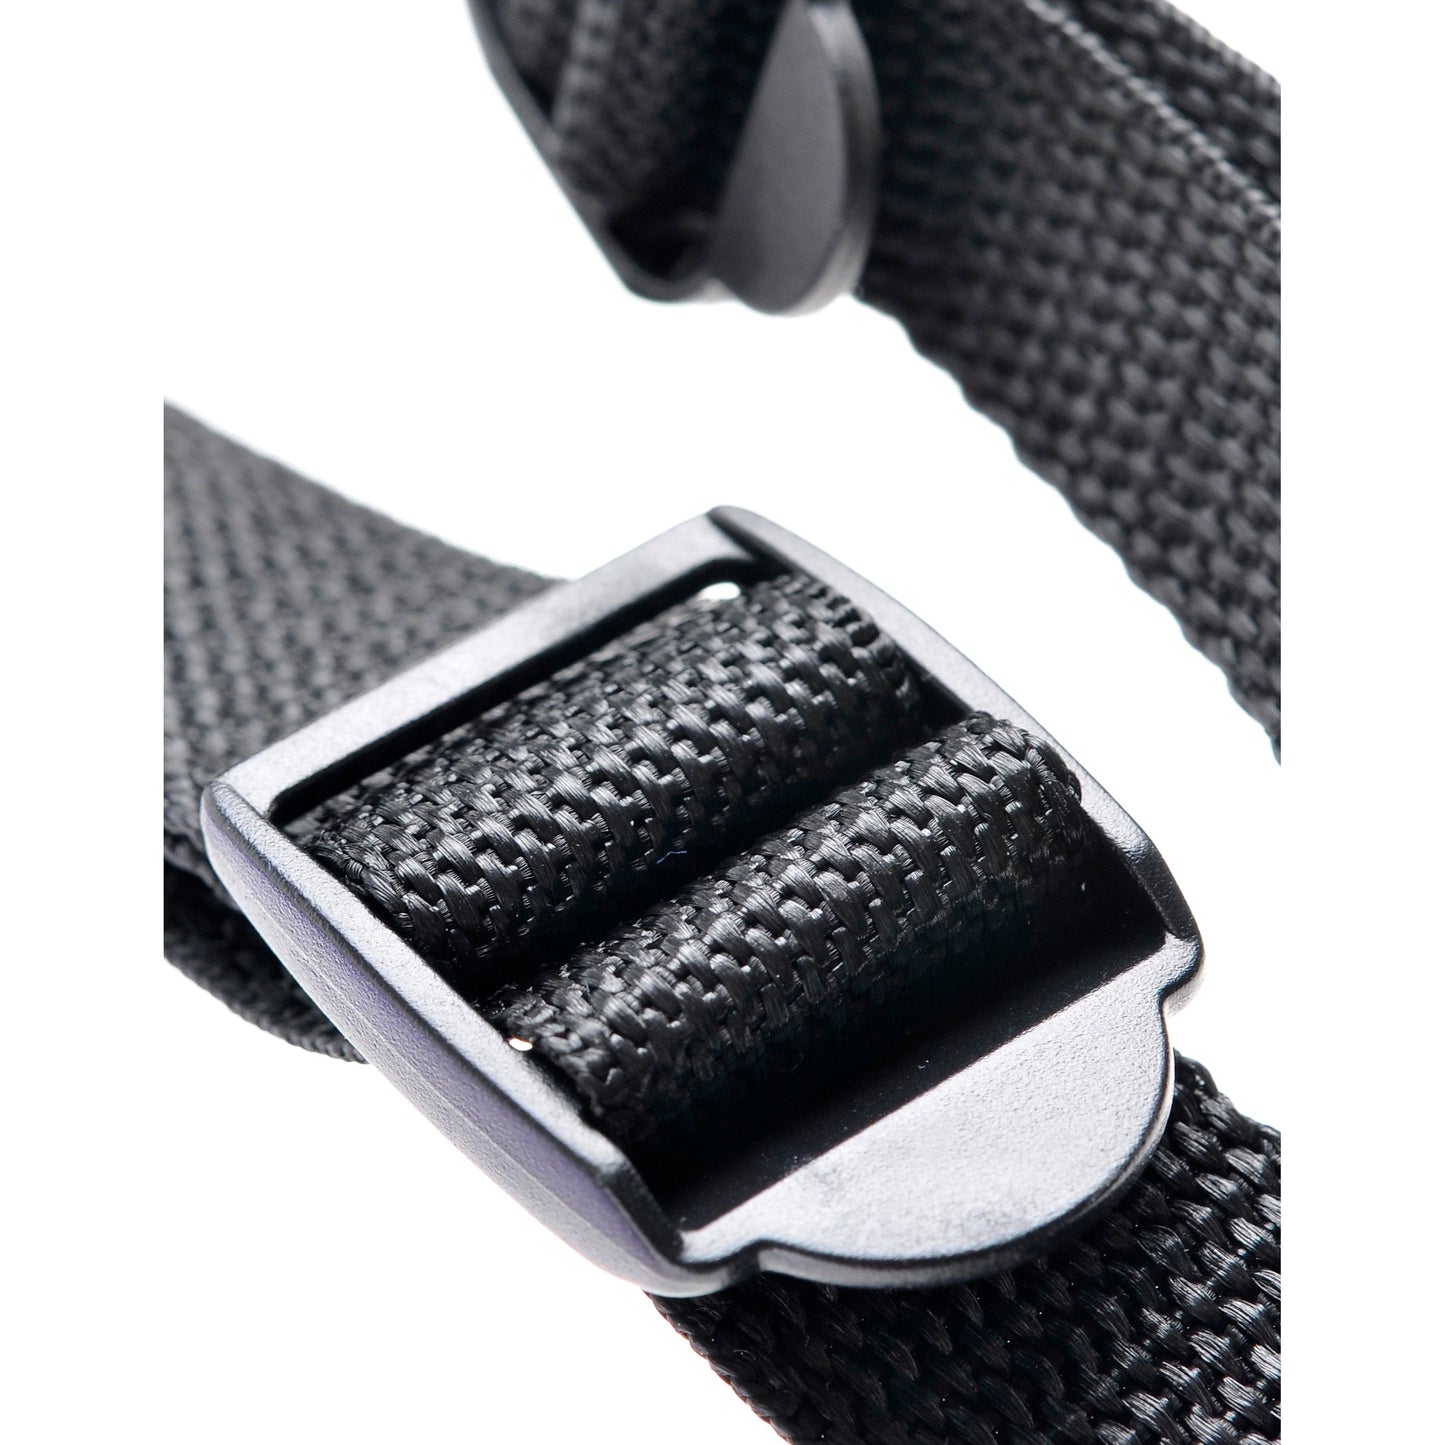 Dillio Pink - 6 Inch Strap-on Suspender Harness  Set